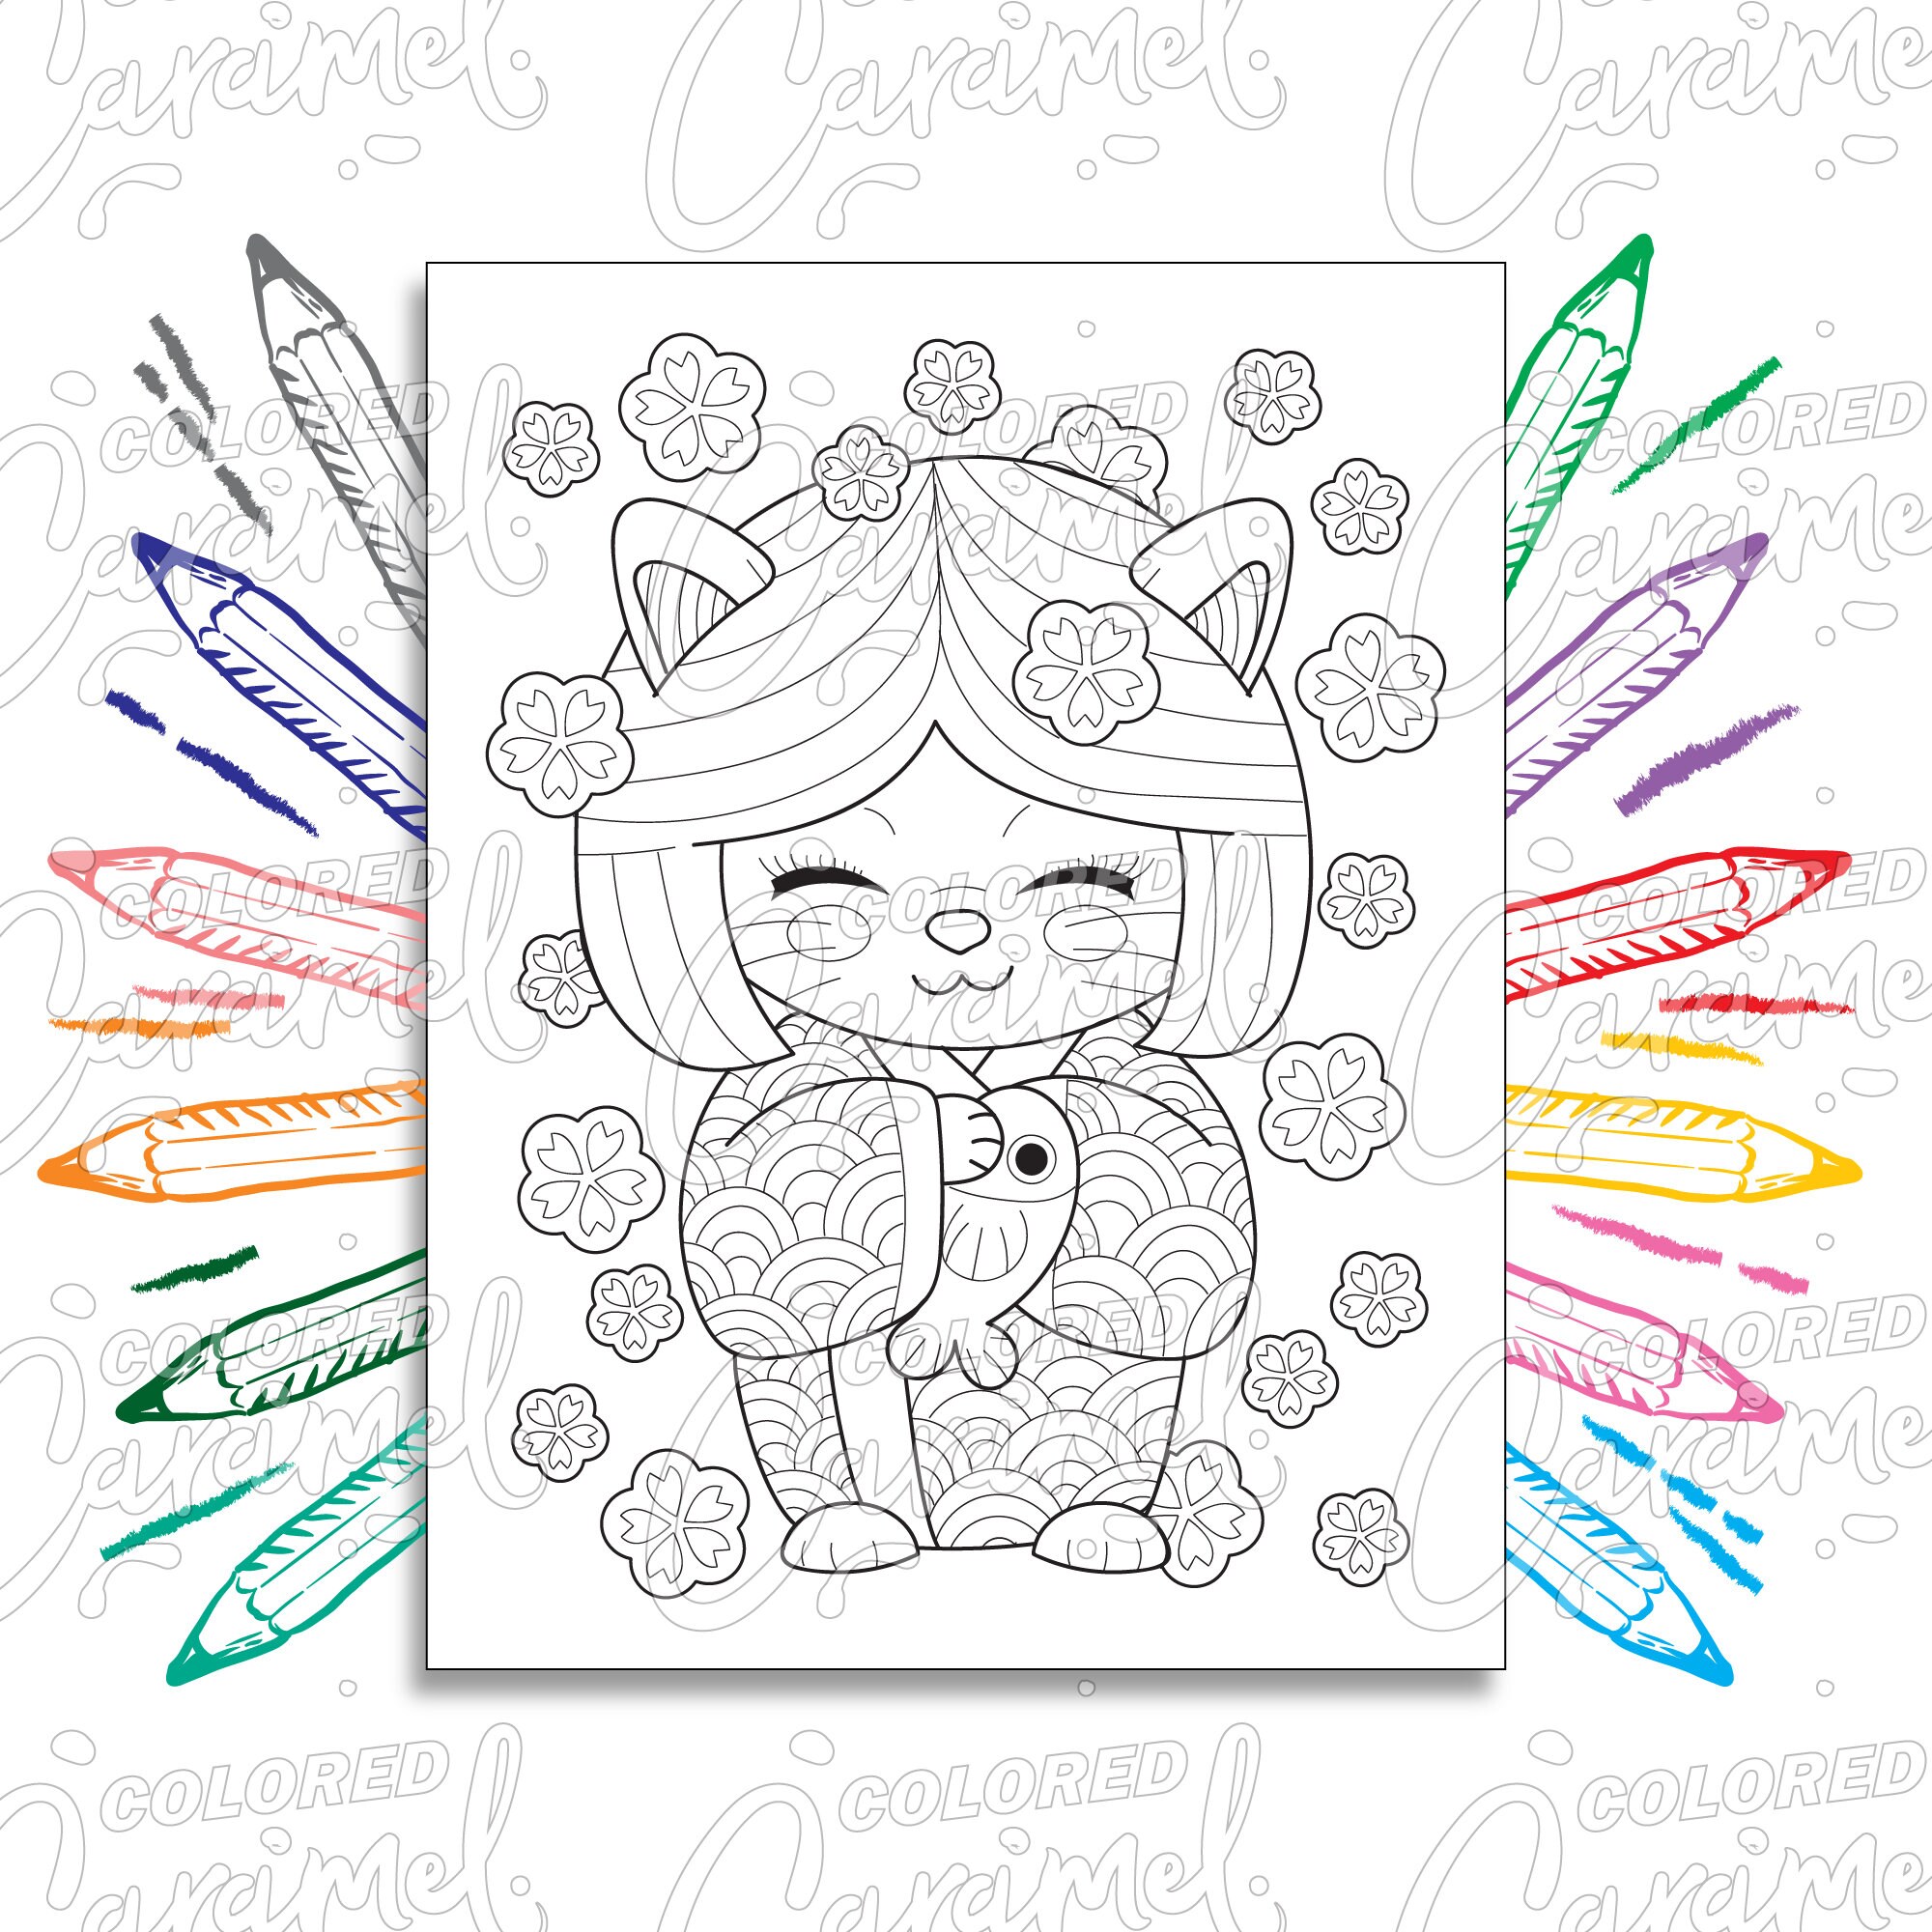 Kawaii Coloring Page Digital Download PDF with Japanese Kokeshi Geisha Neko Cat Doll and Sakura Cherry Blossom Flowers